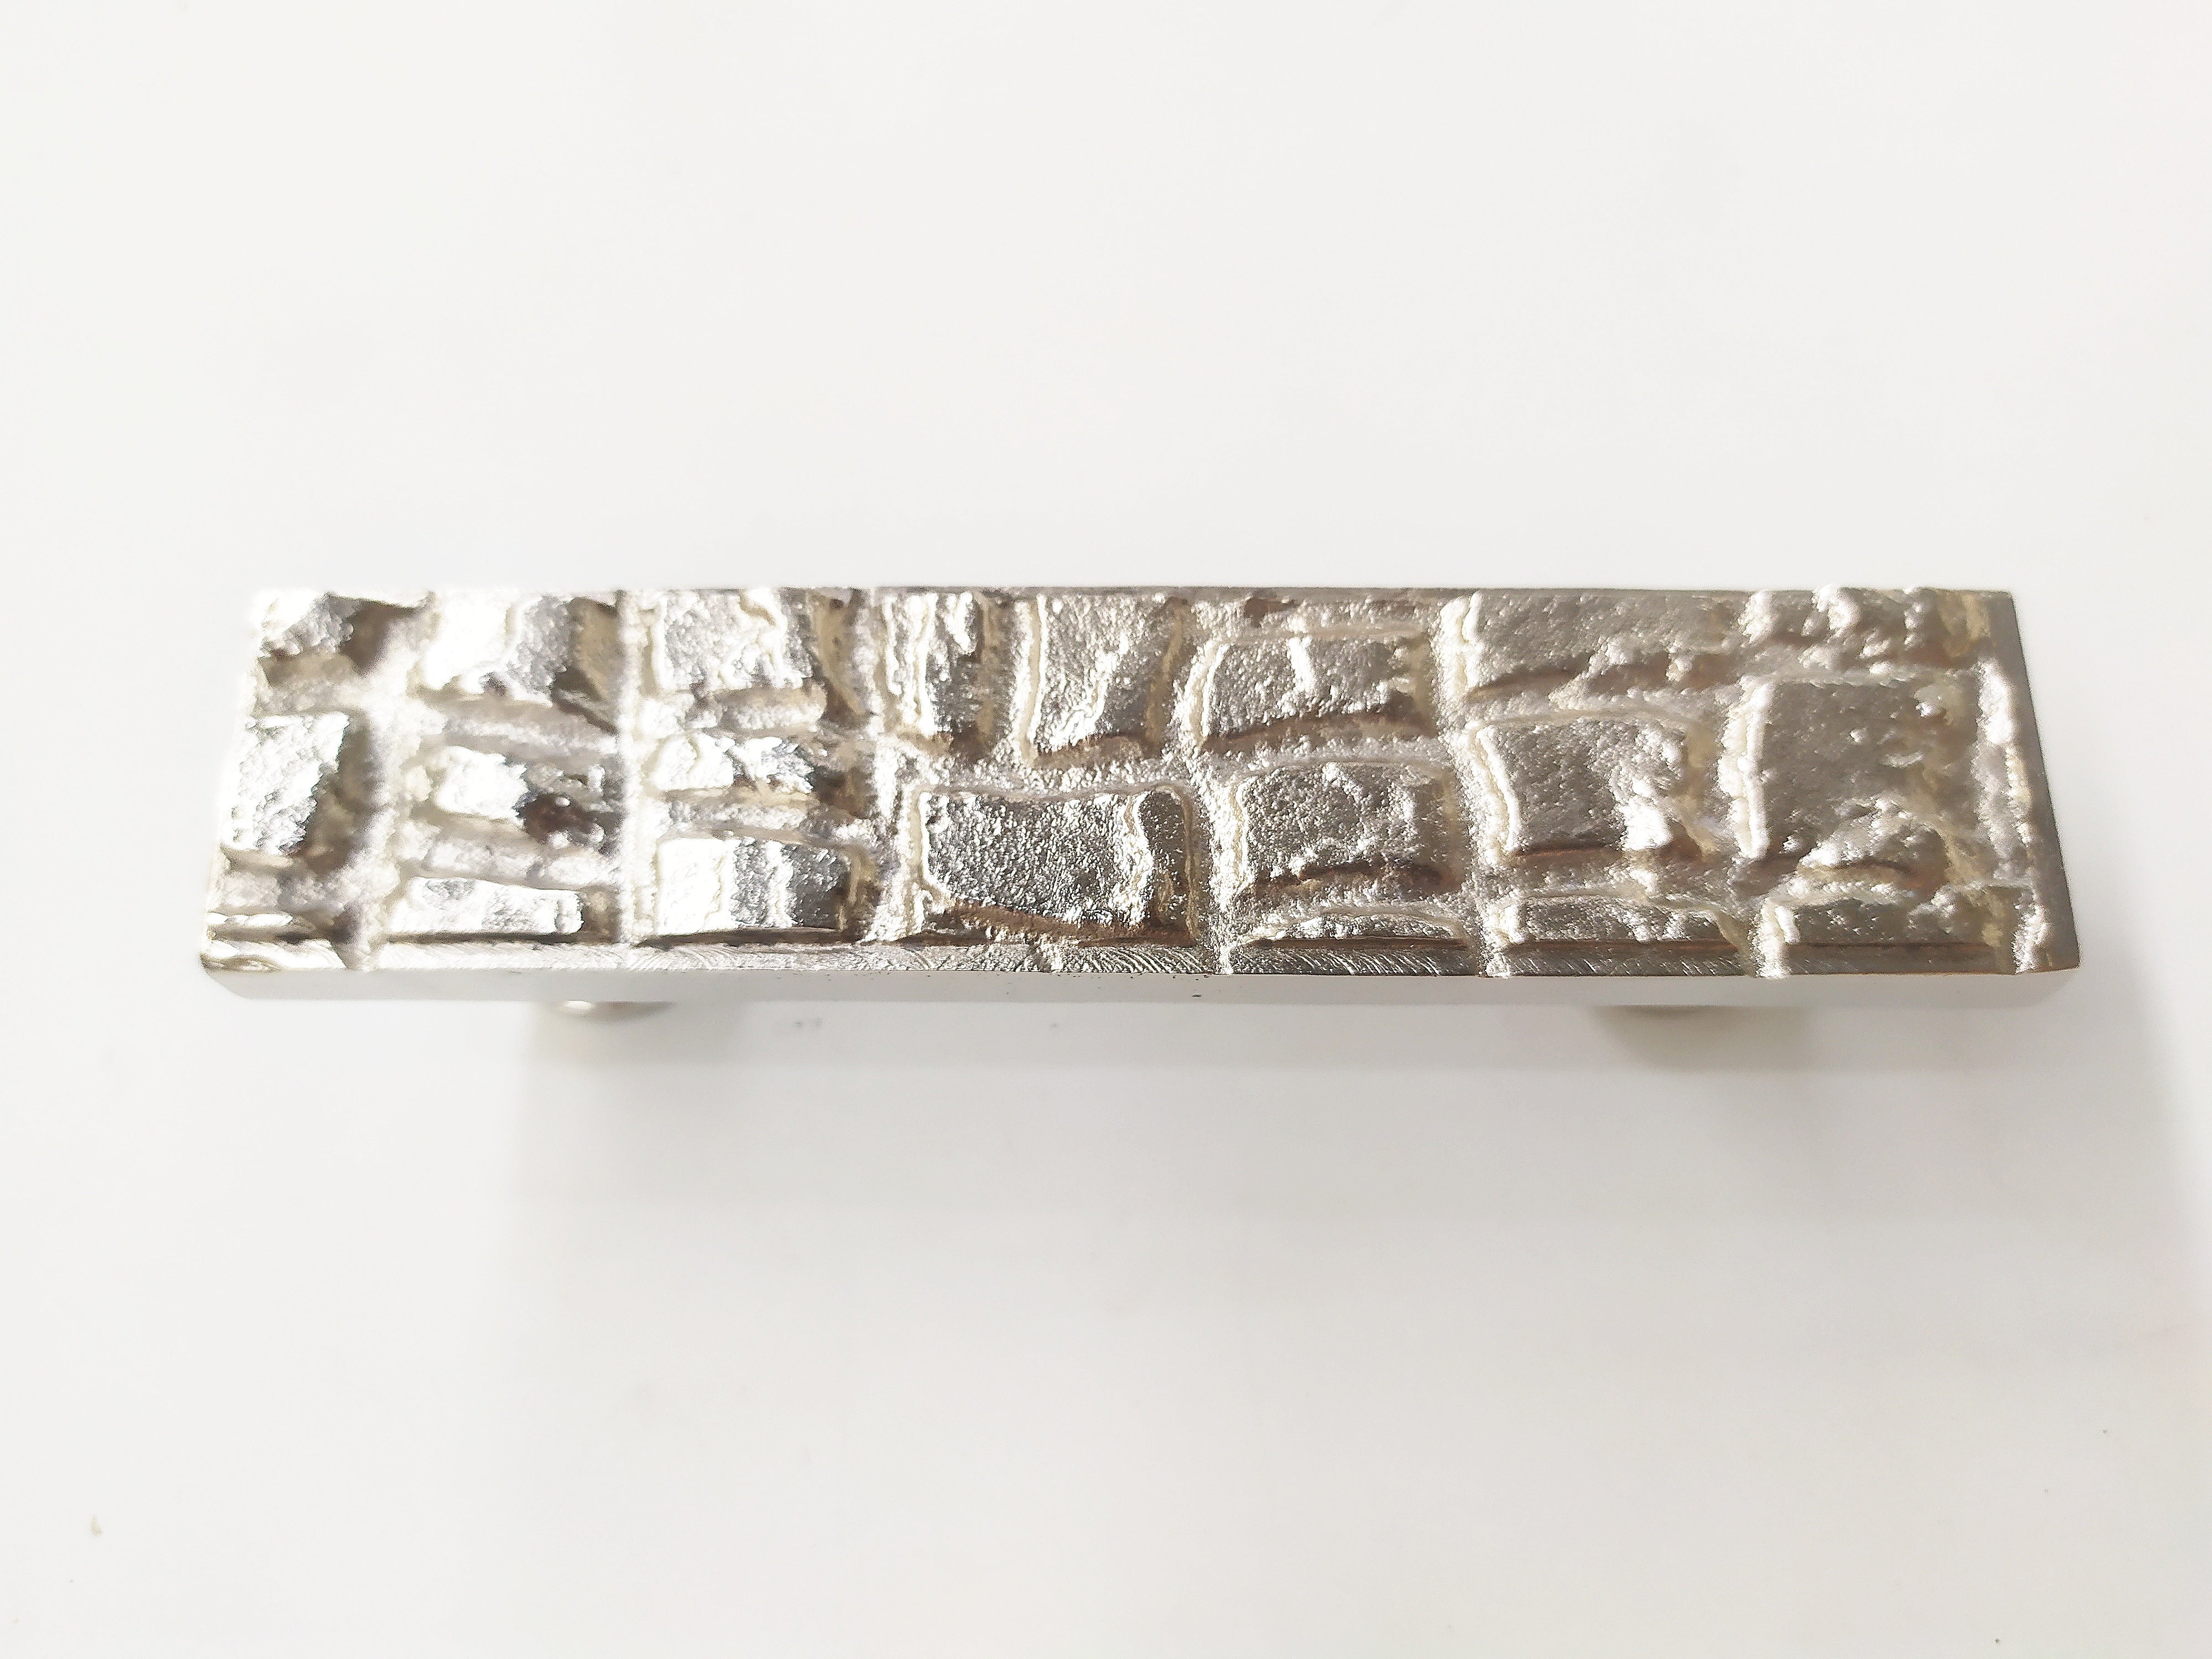 Metal with alligator skin texture handle pull in nickel plating